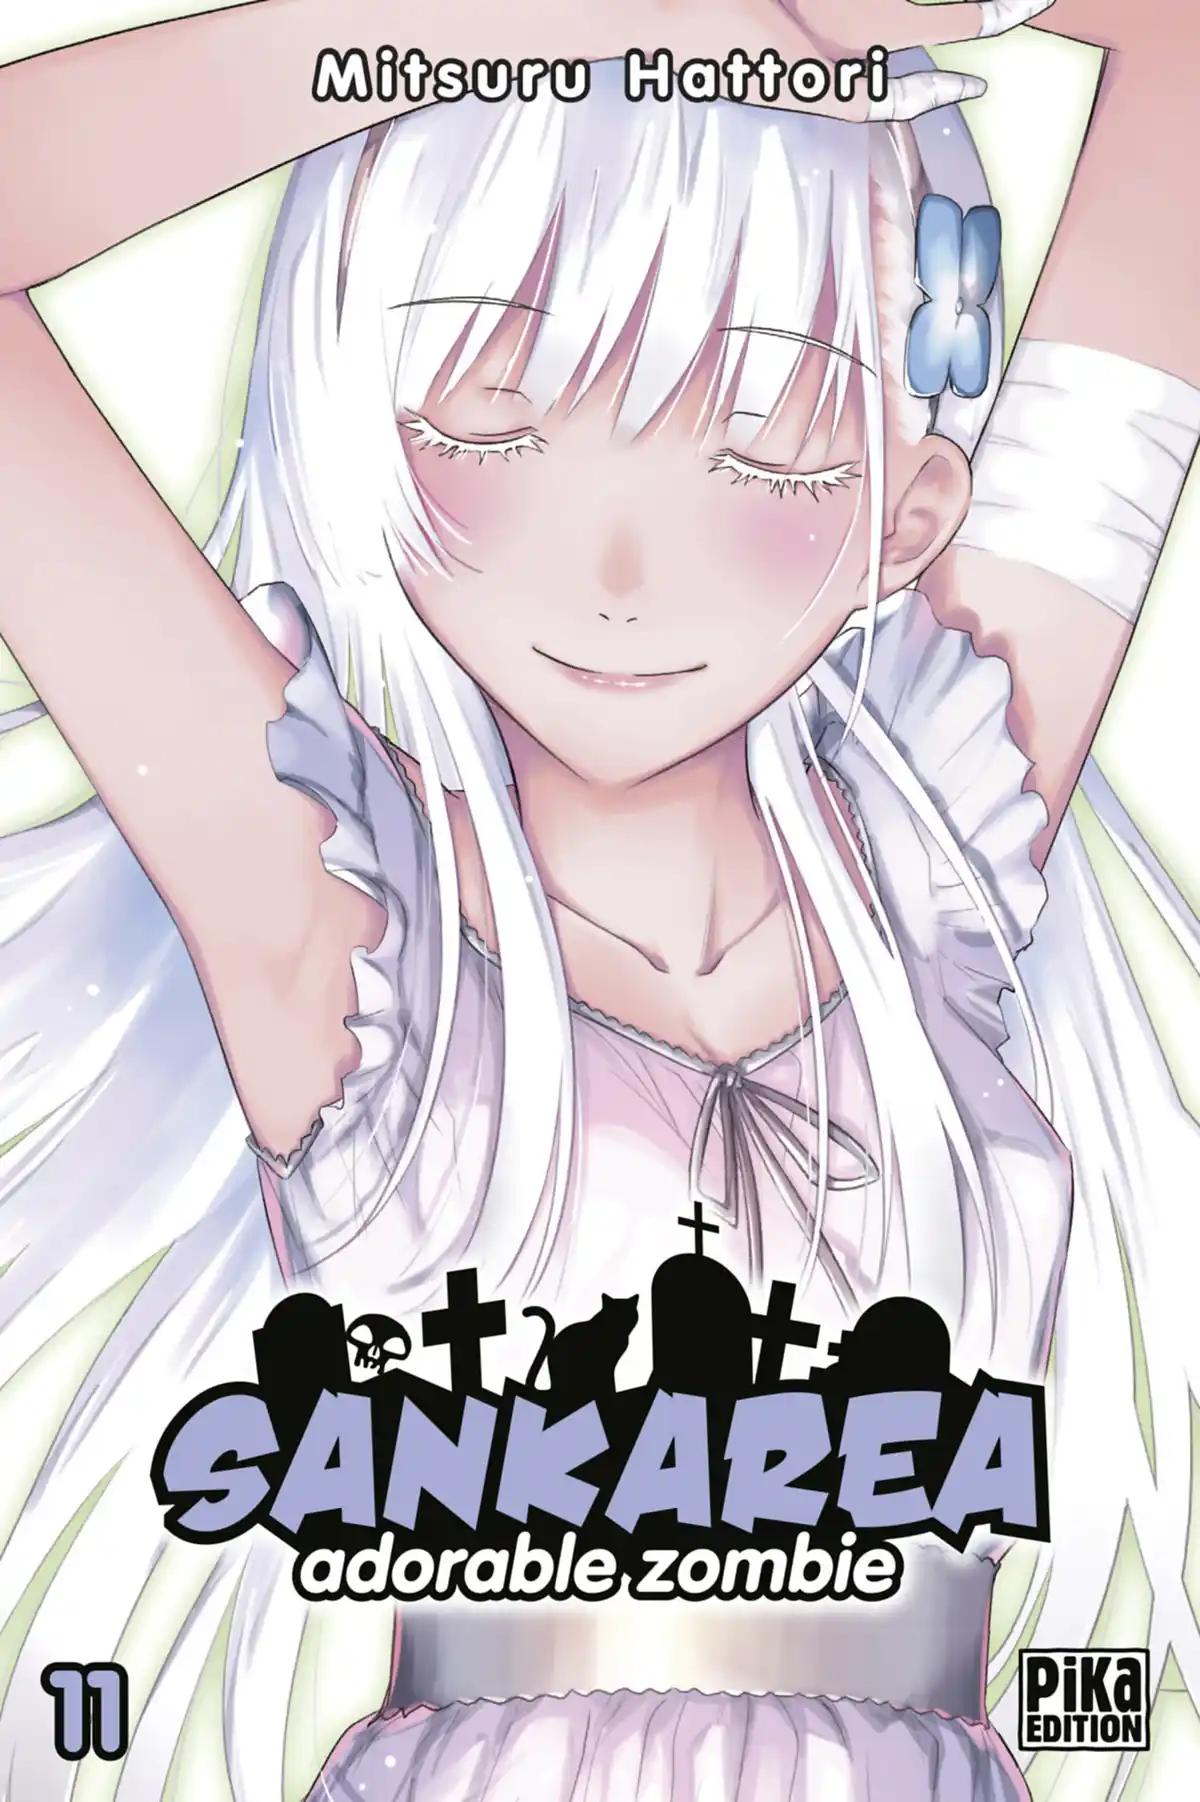 Sankarea, adorable zombie Volume 11 page 1